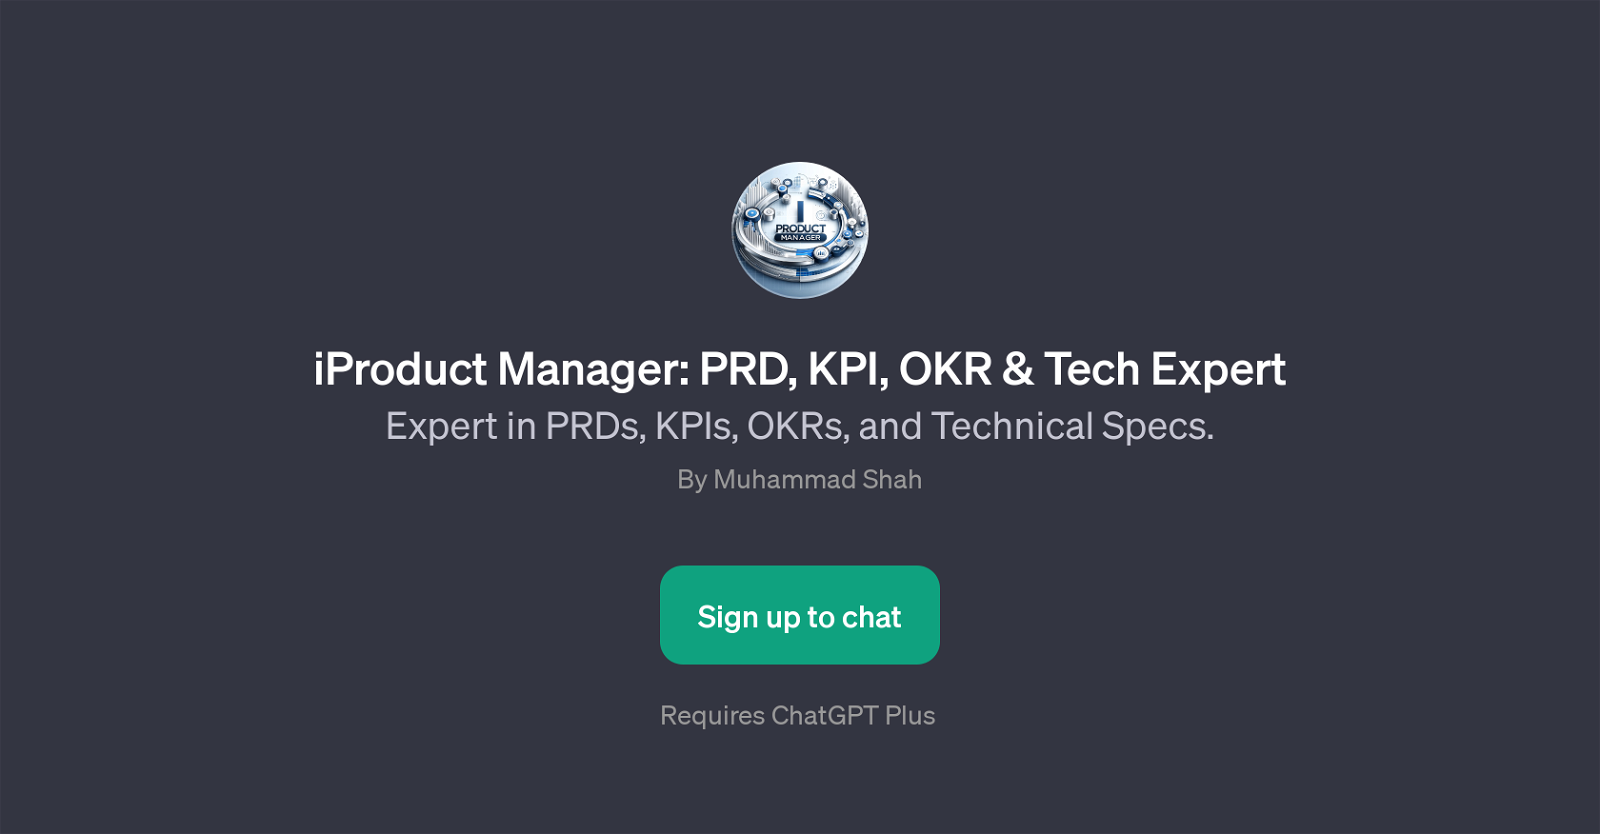 iProduct Manager: PRD, KPI, OKR & Tech Expert website